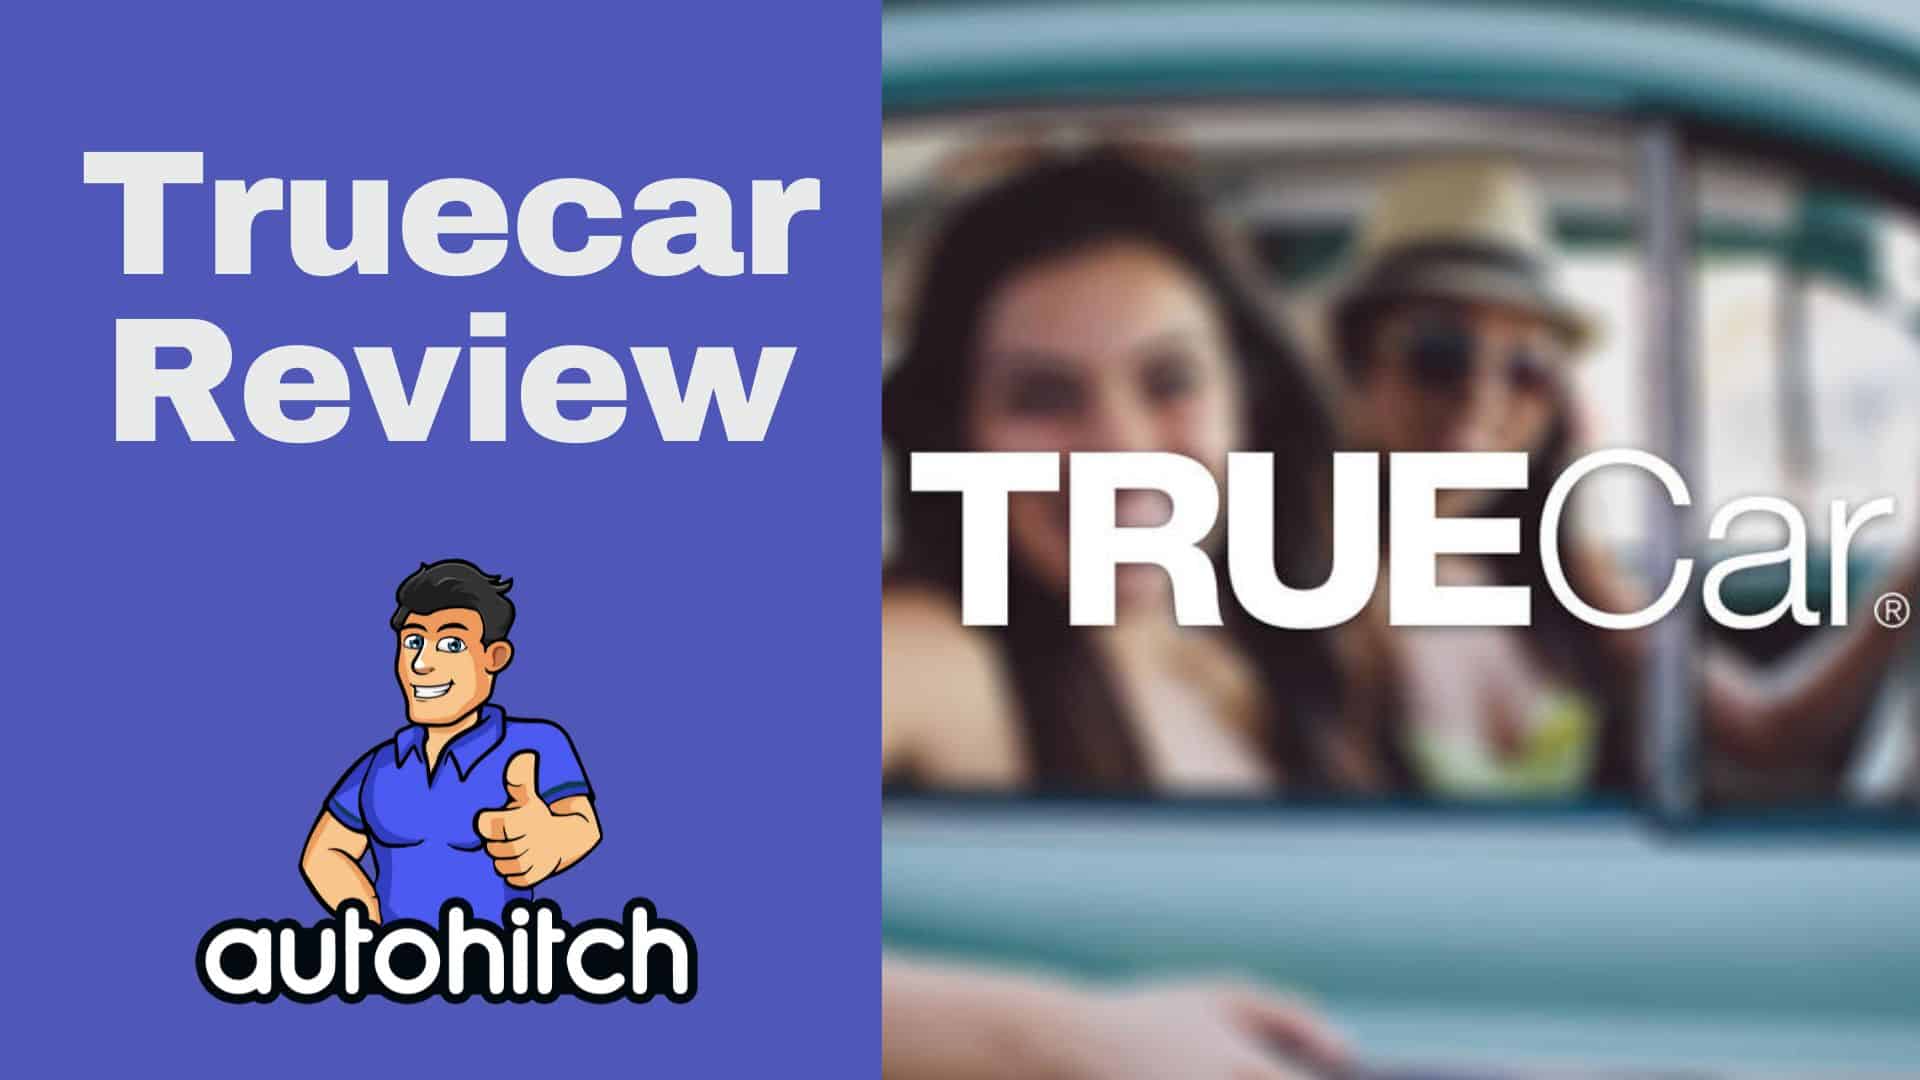 Truecar Review